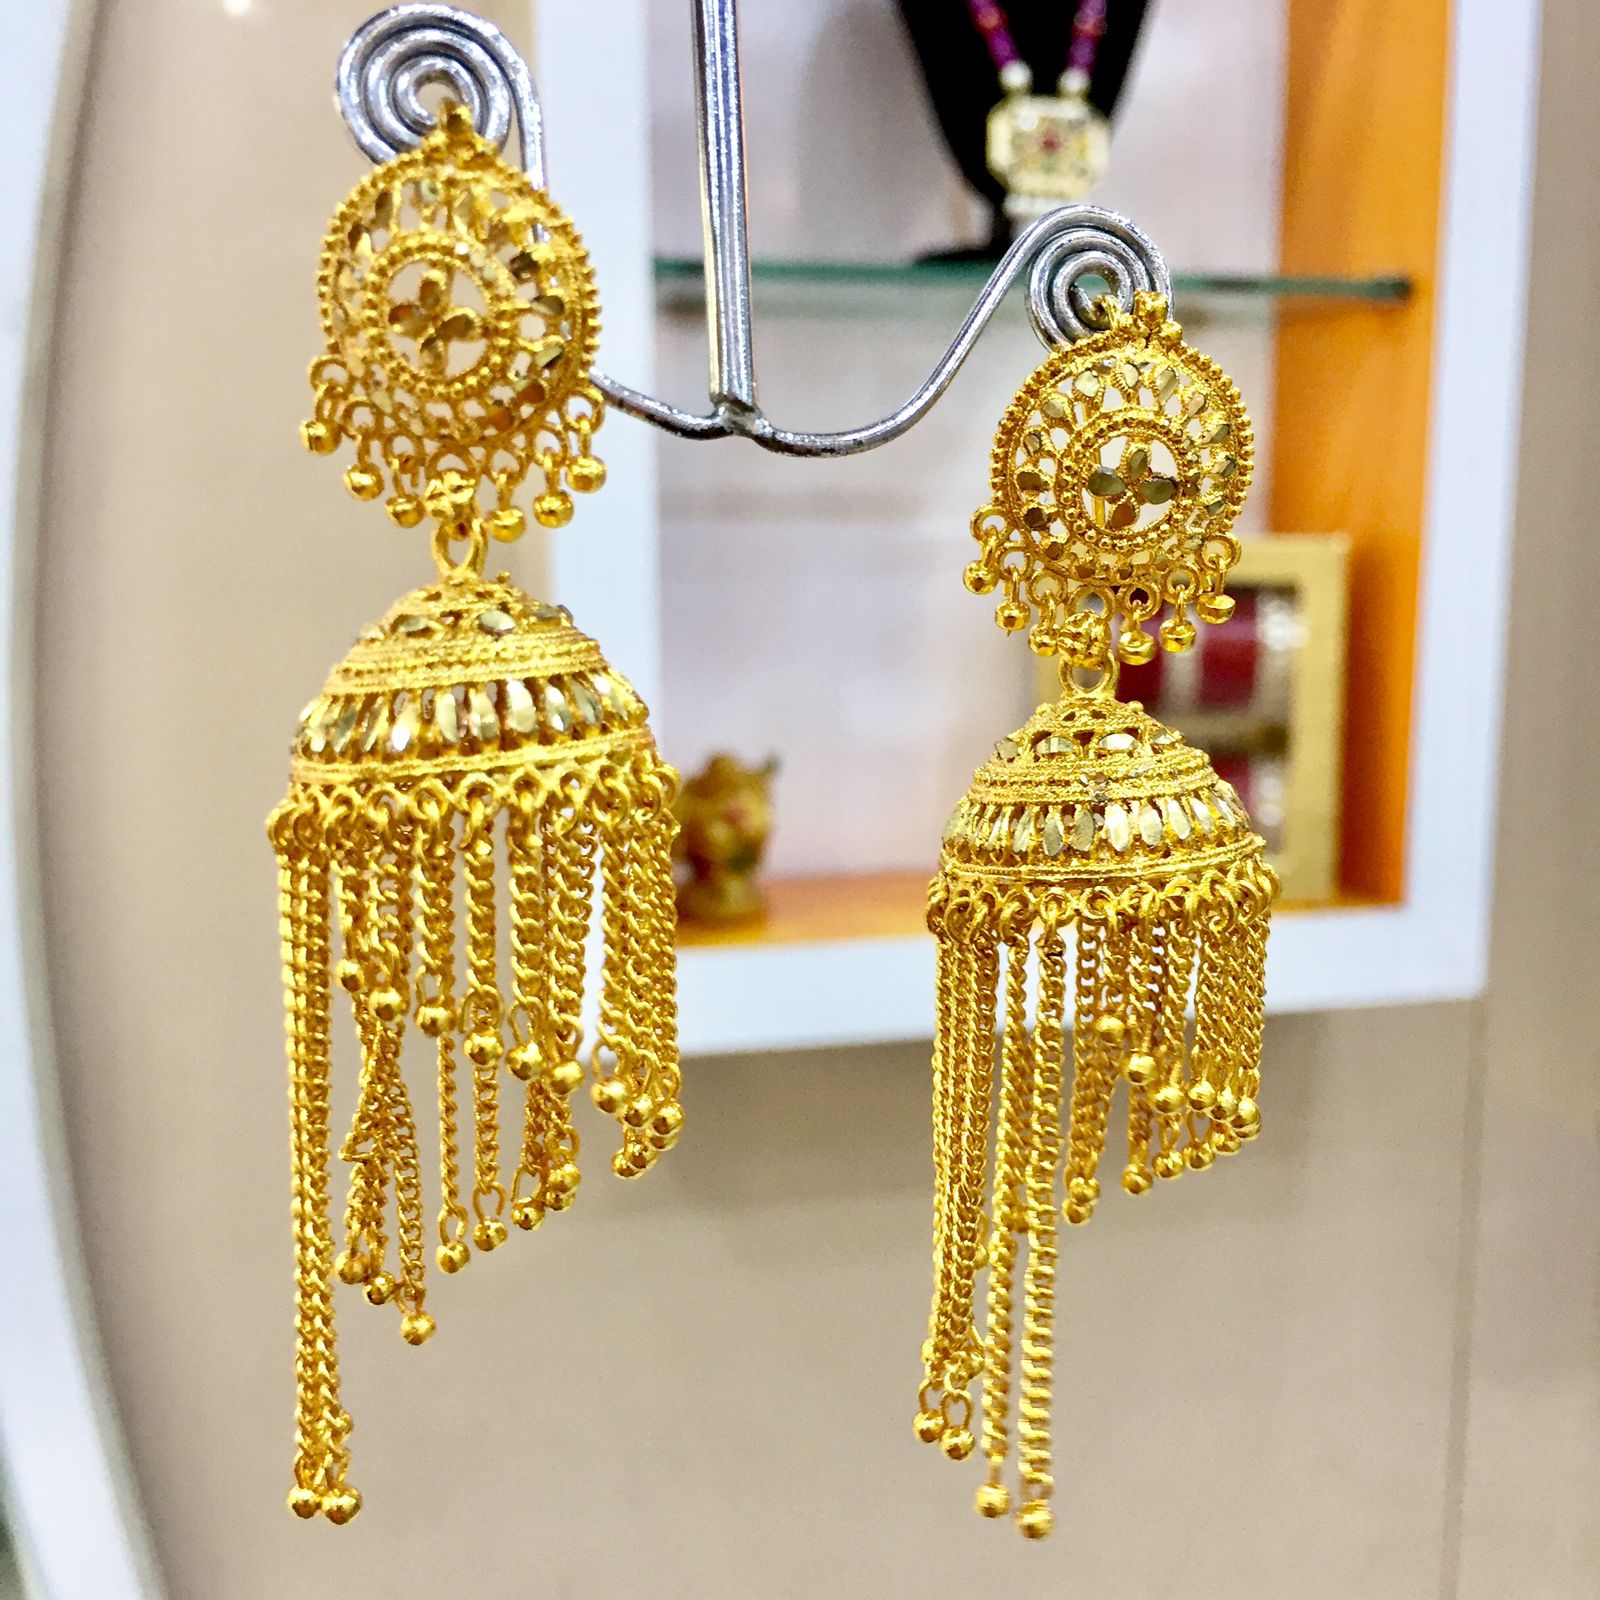 Details more than 224 antic earrings design best